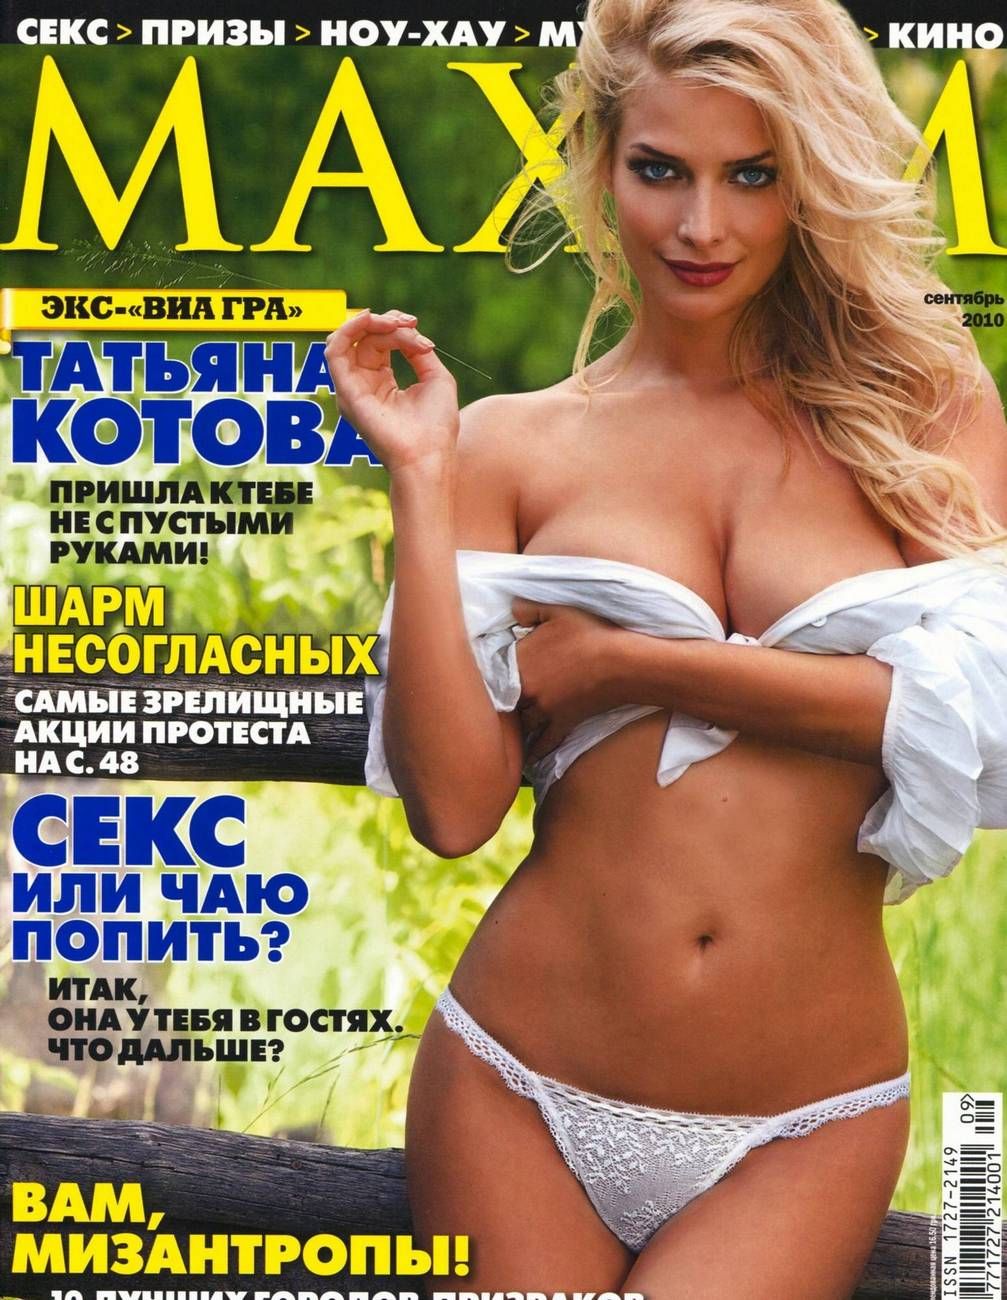 Голая Татьяна Котова на фото для мужских журналов.